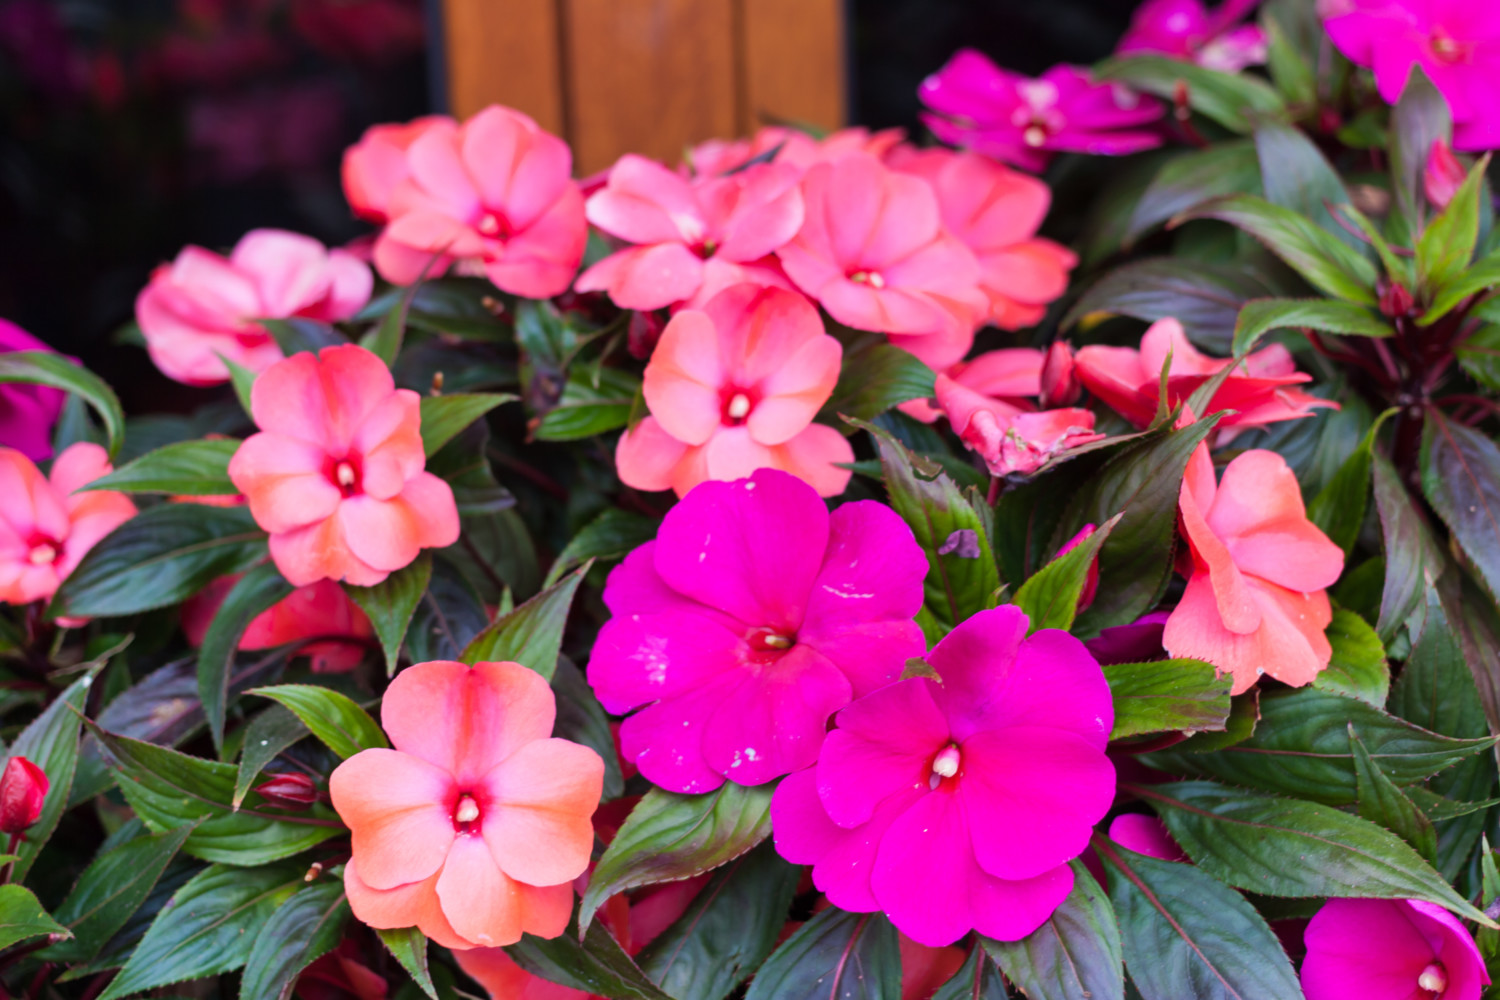 Bright pink impatiens hawkeri, the New Guinea impatiens, in bloom